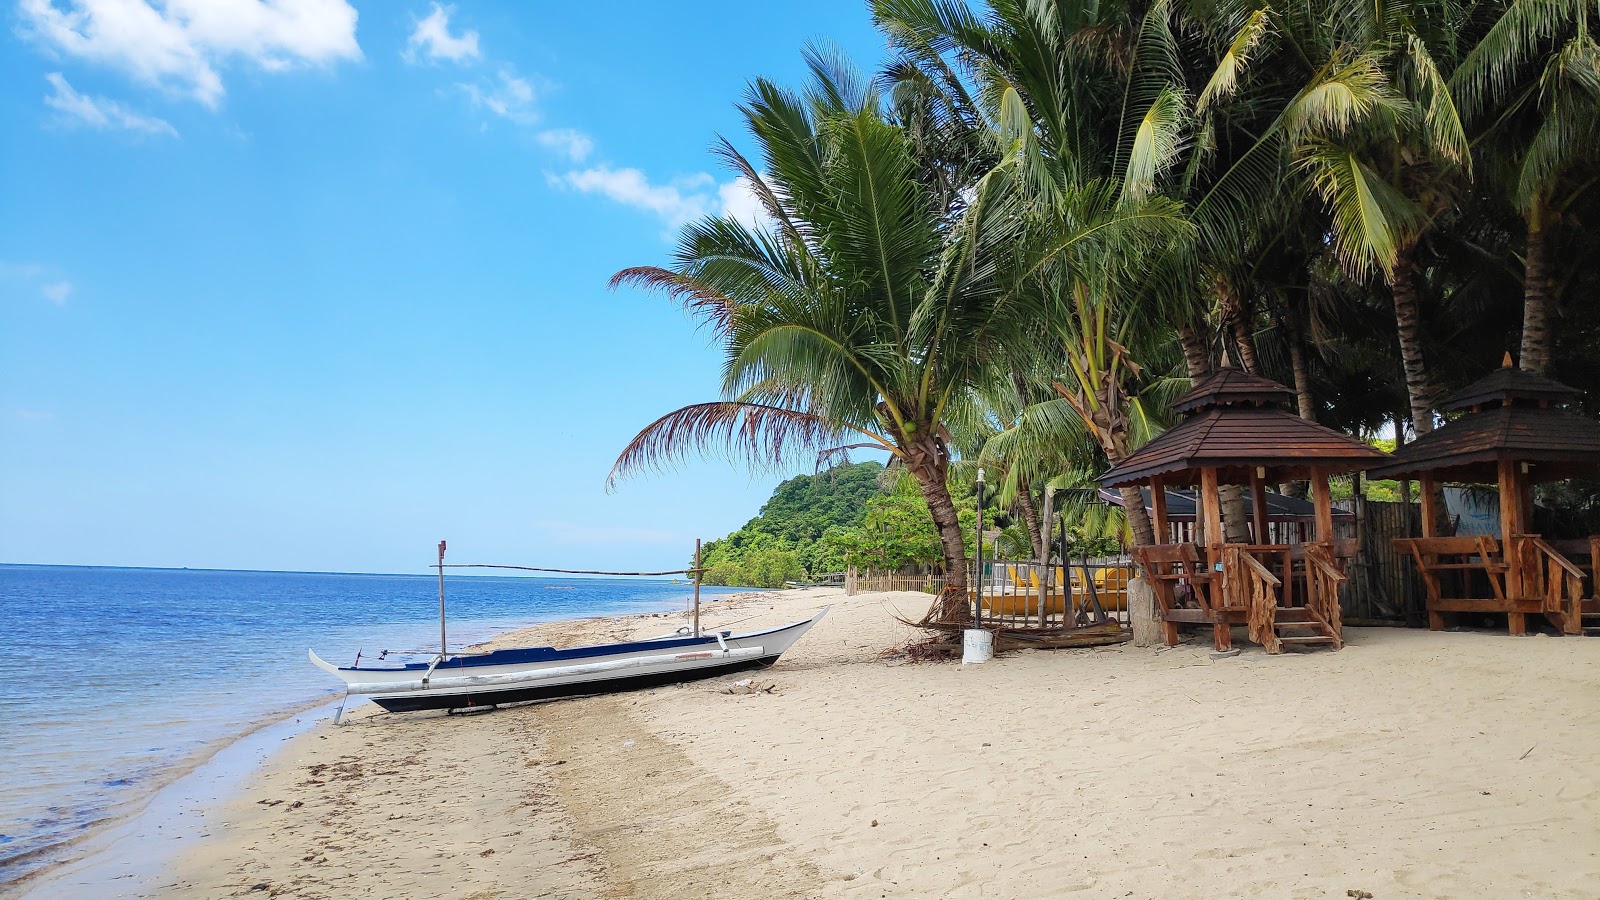 Lian batangas beach的照片 - 受到放松专家欢迎的热门地点